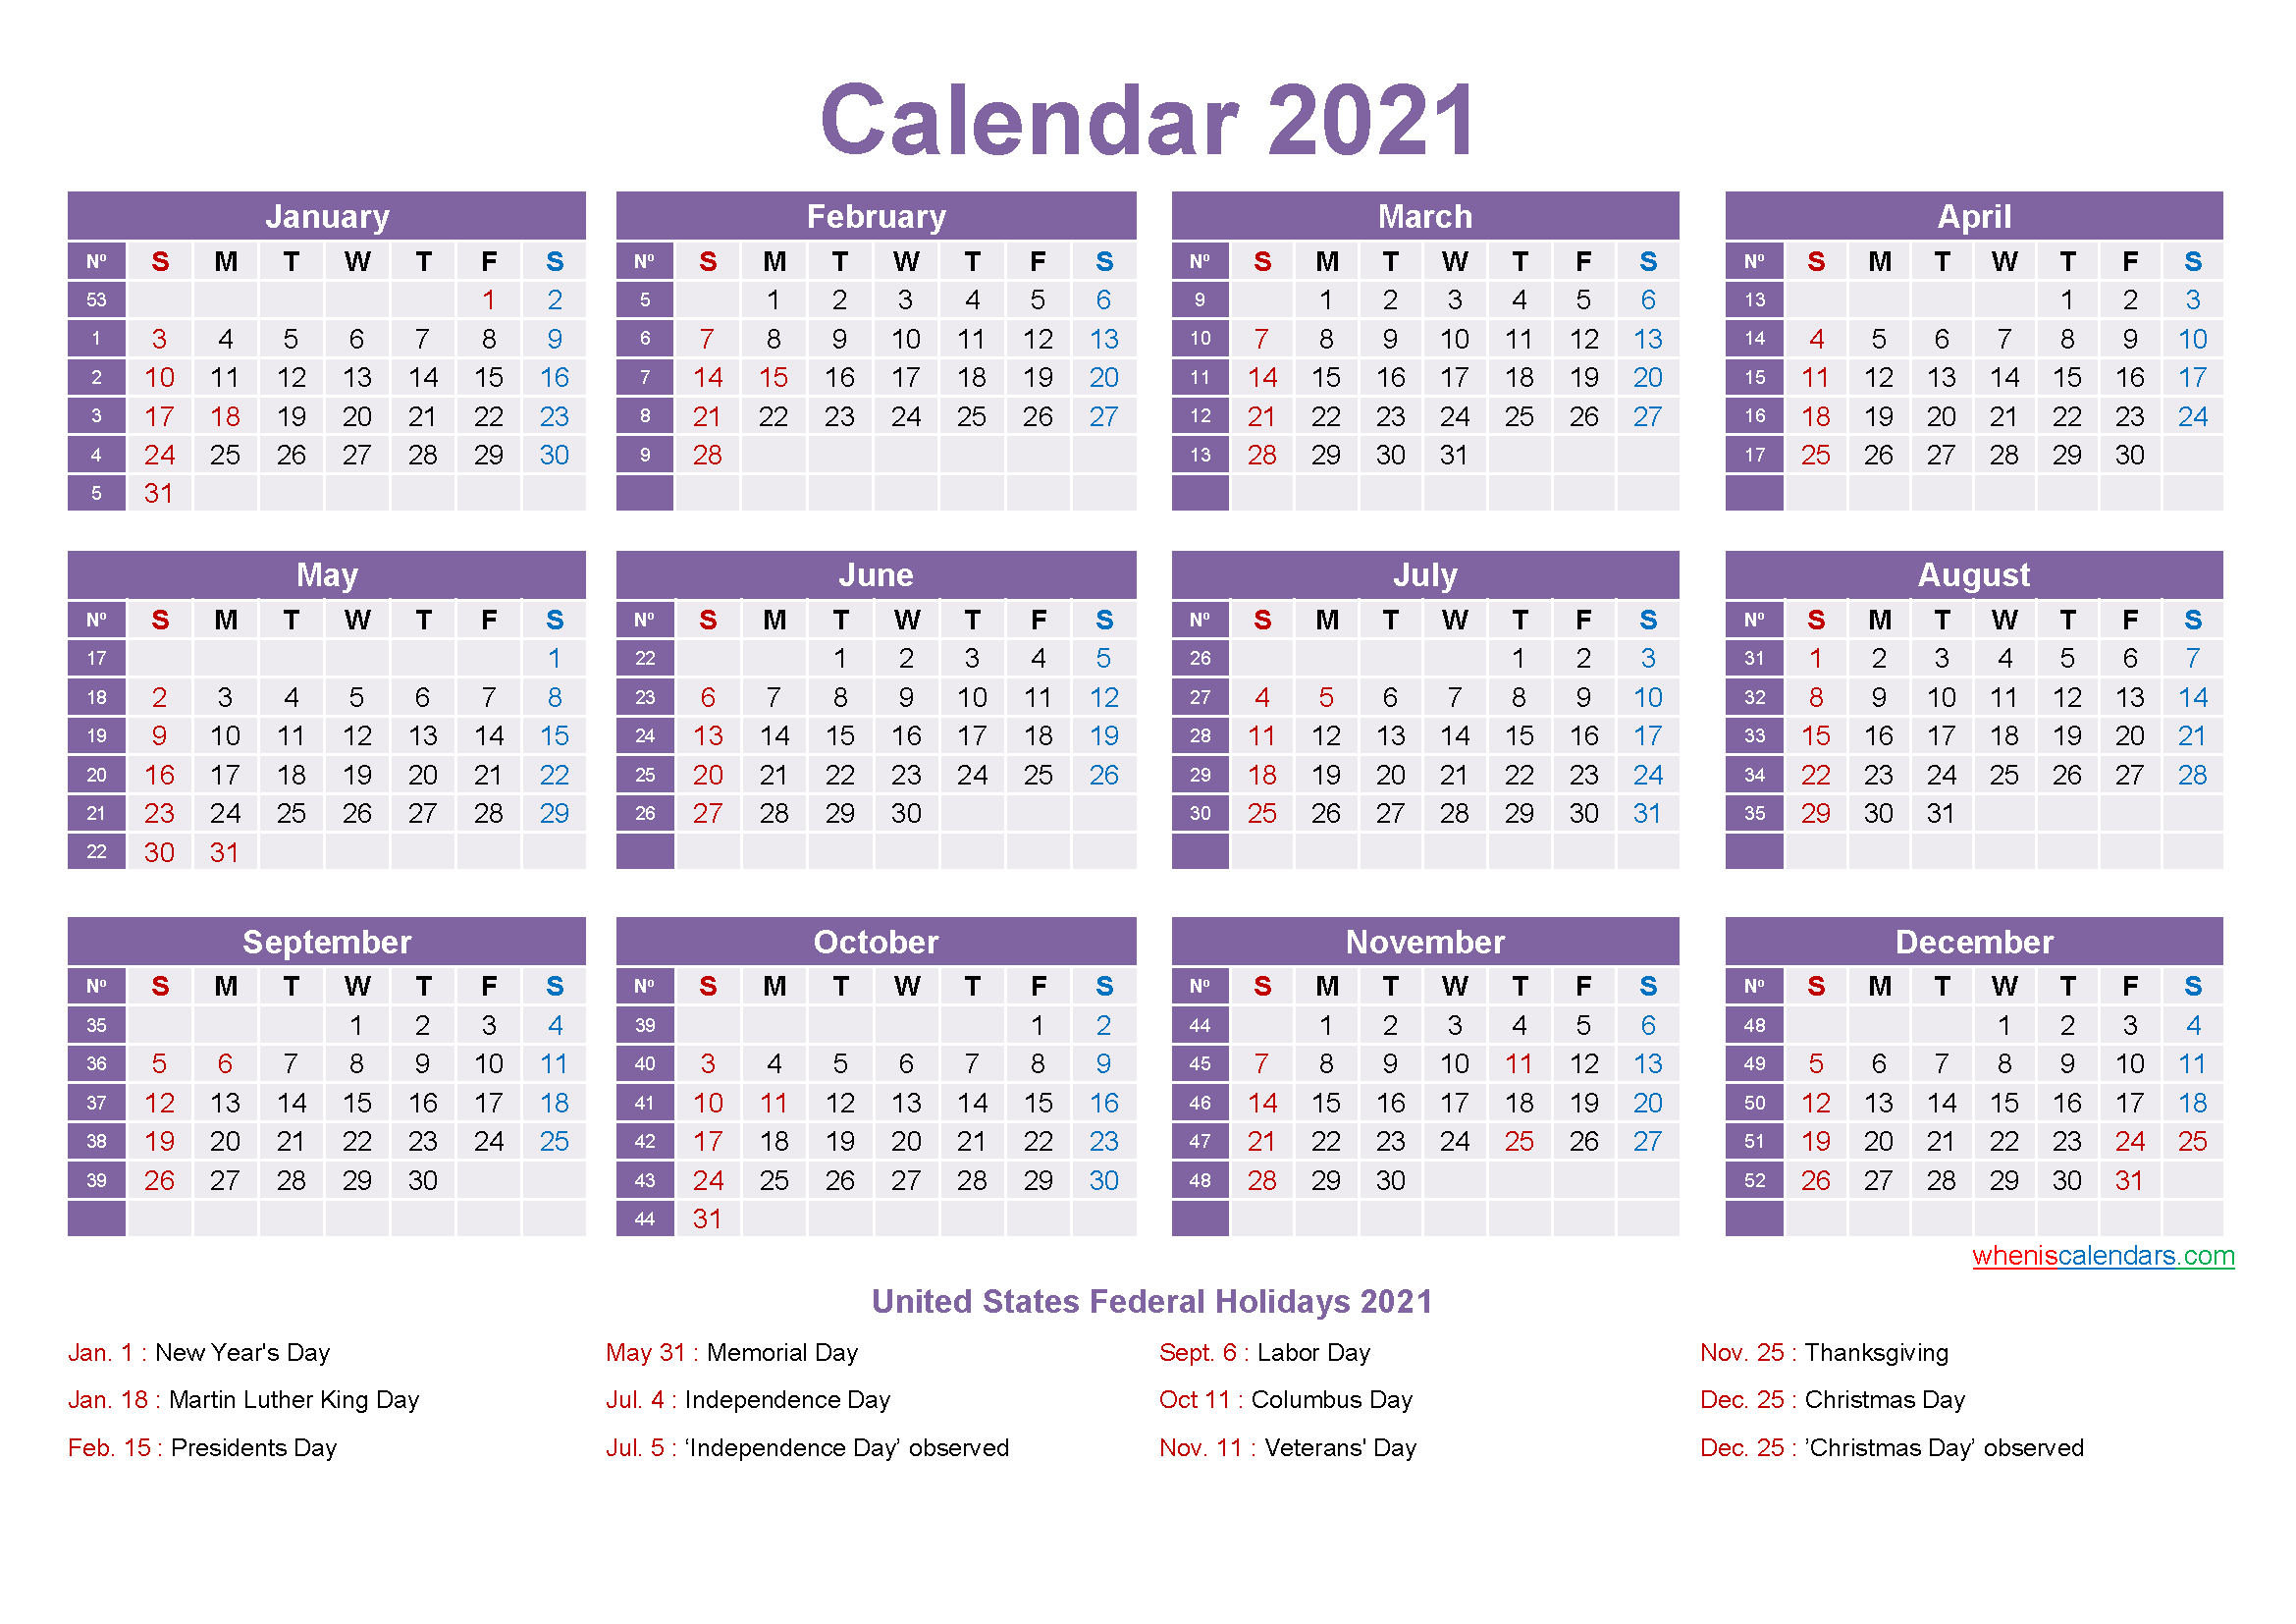 Mini Desk Calendar 2021 Free Printable